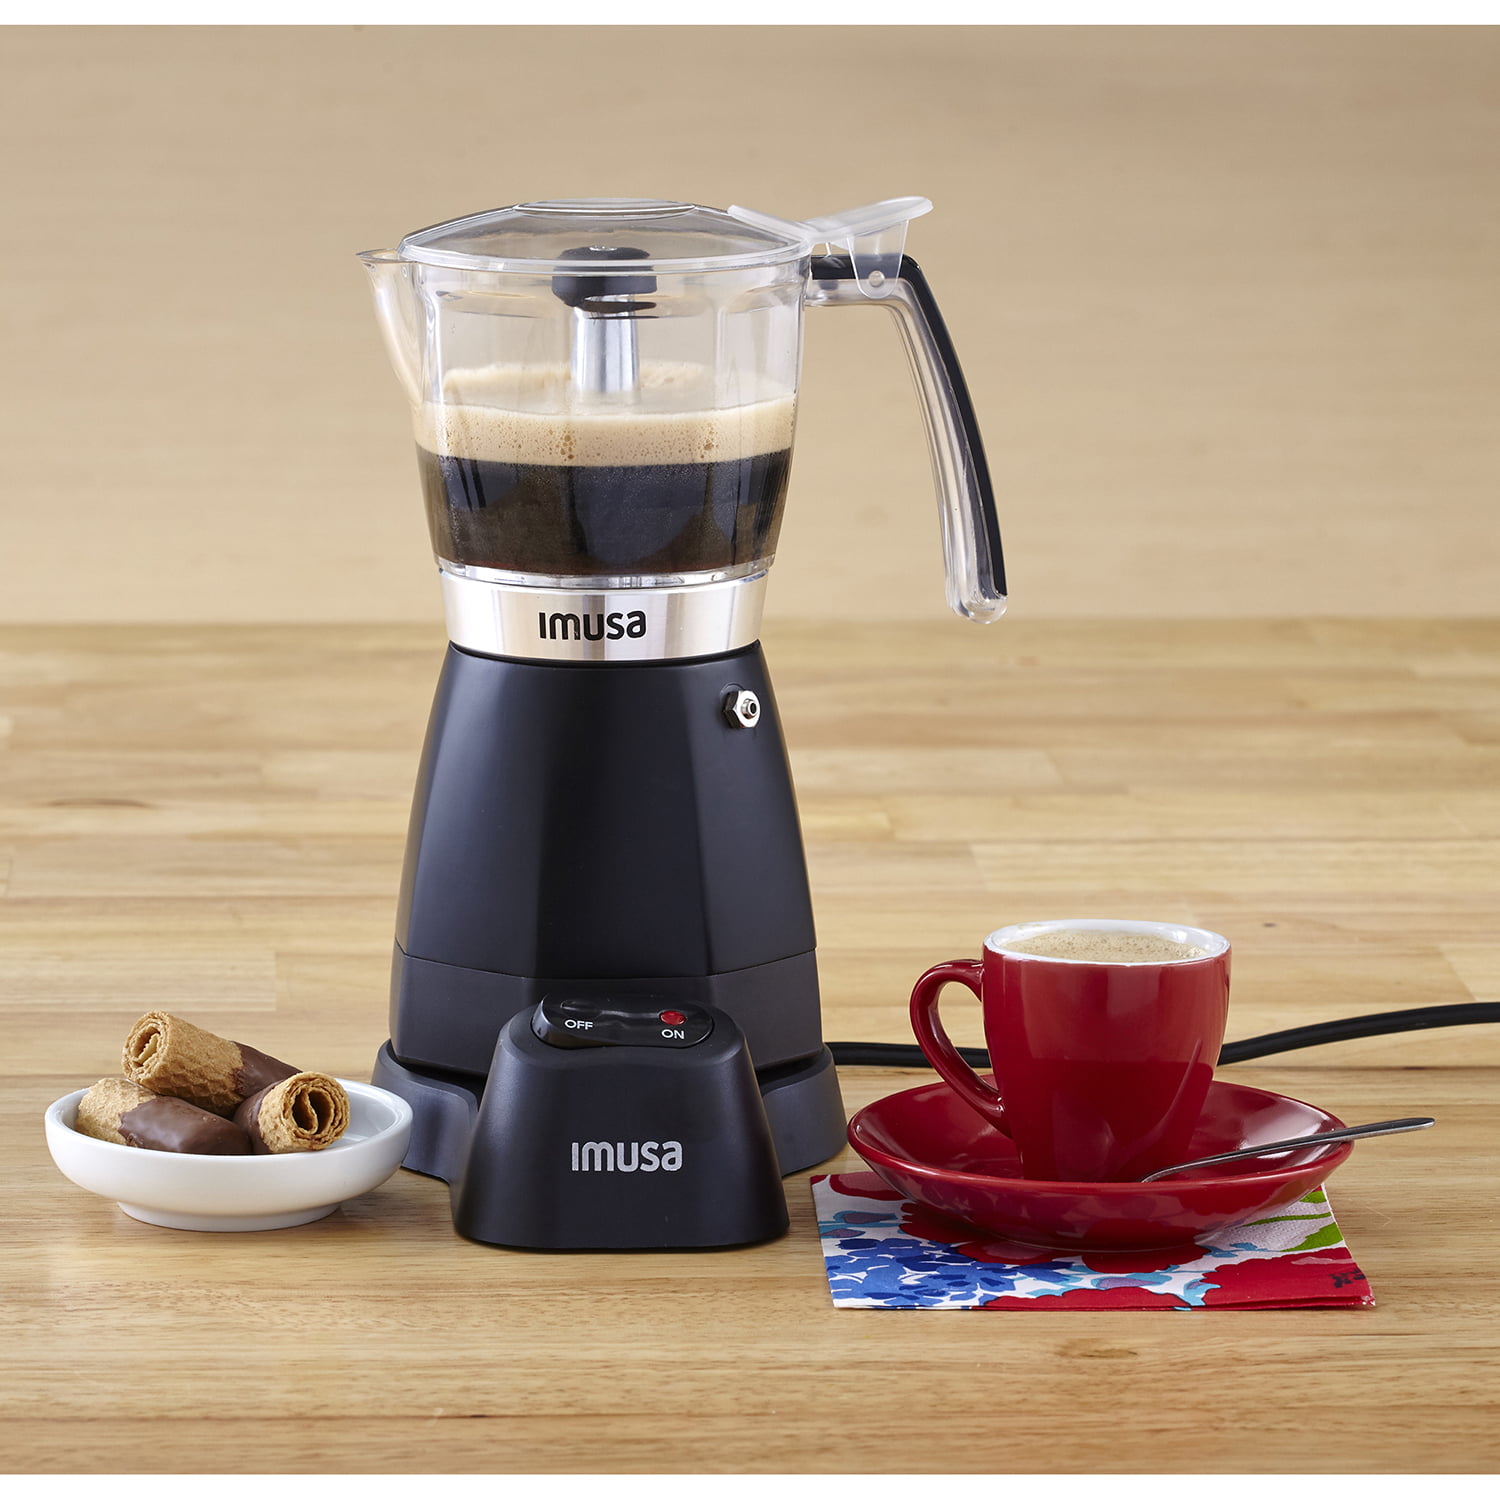 IMUSA B120-60006 COFFEE MAKER USE AND CARE MANUAL